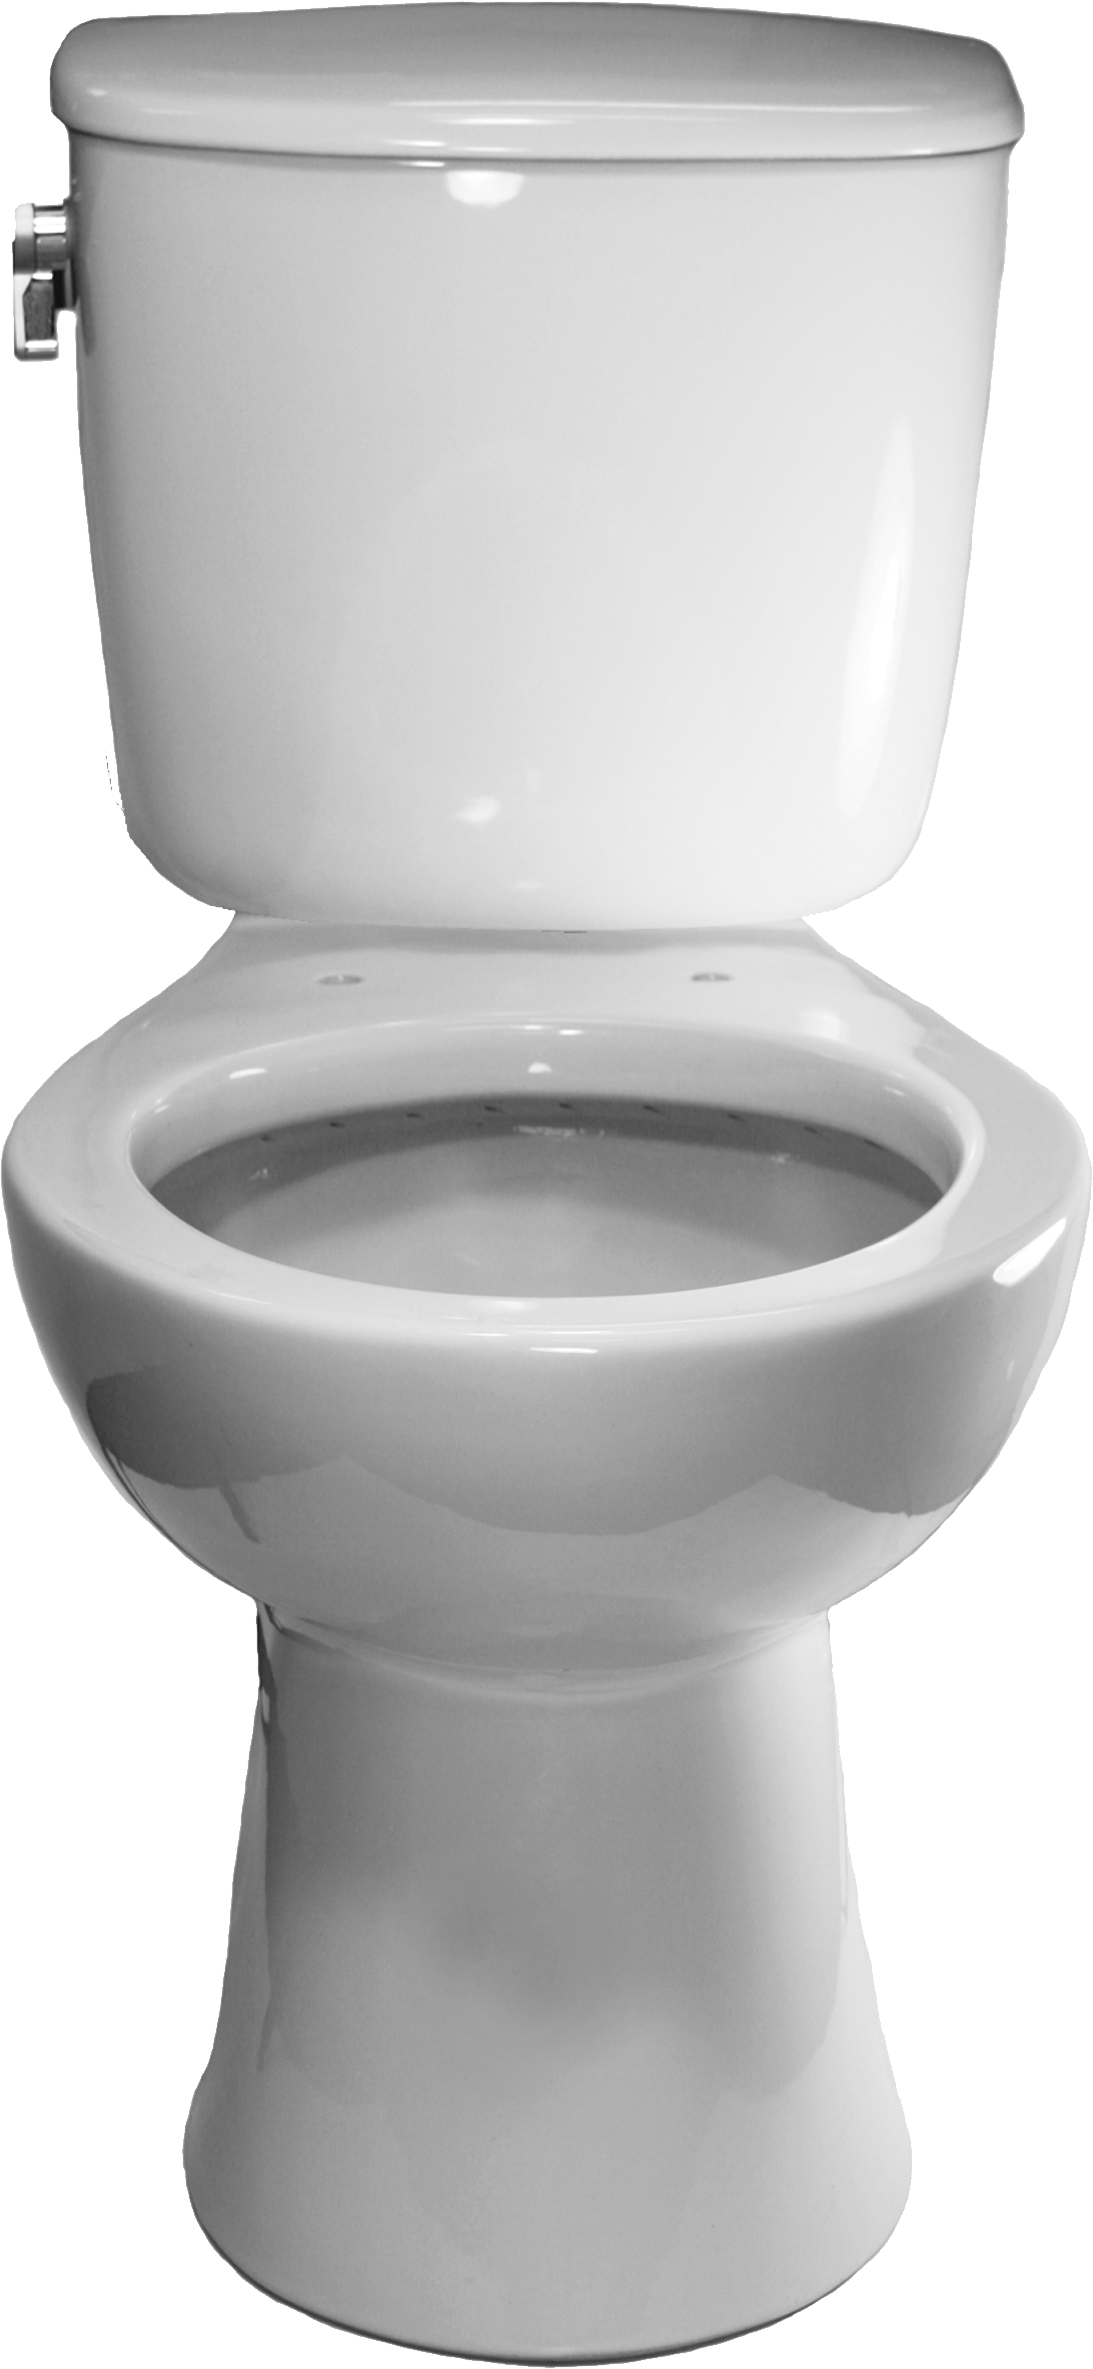 Toilette PNG image